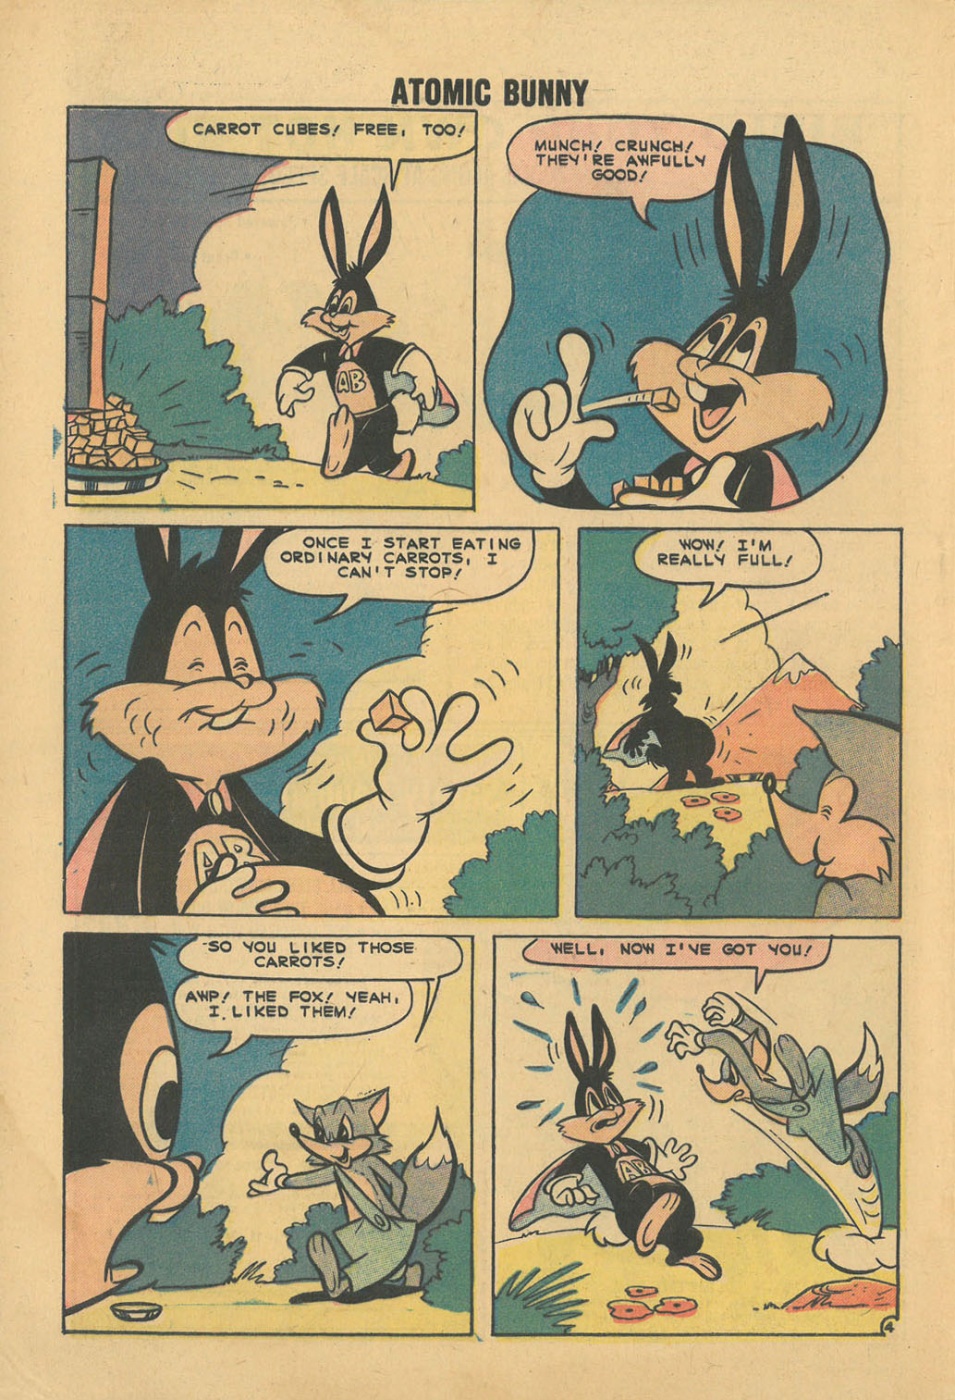 Atomic-Bunny-Comic-Strips (c) (31)